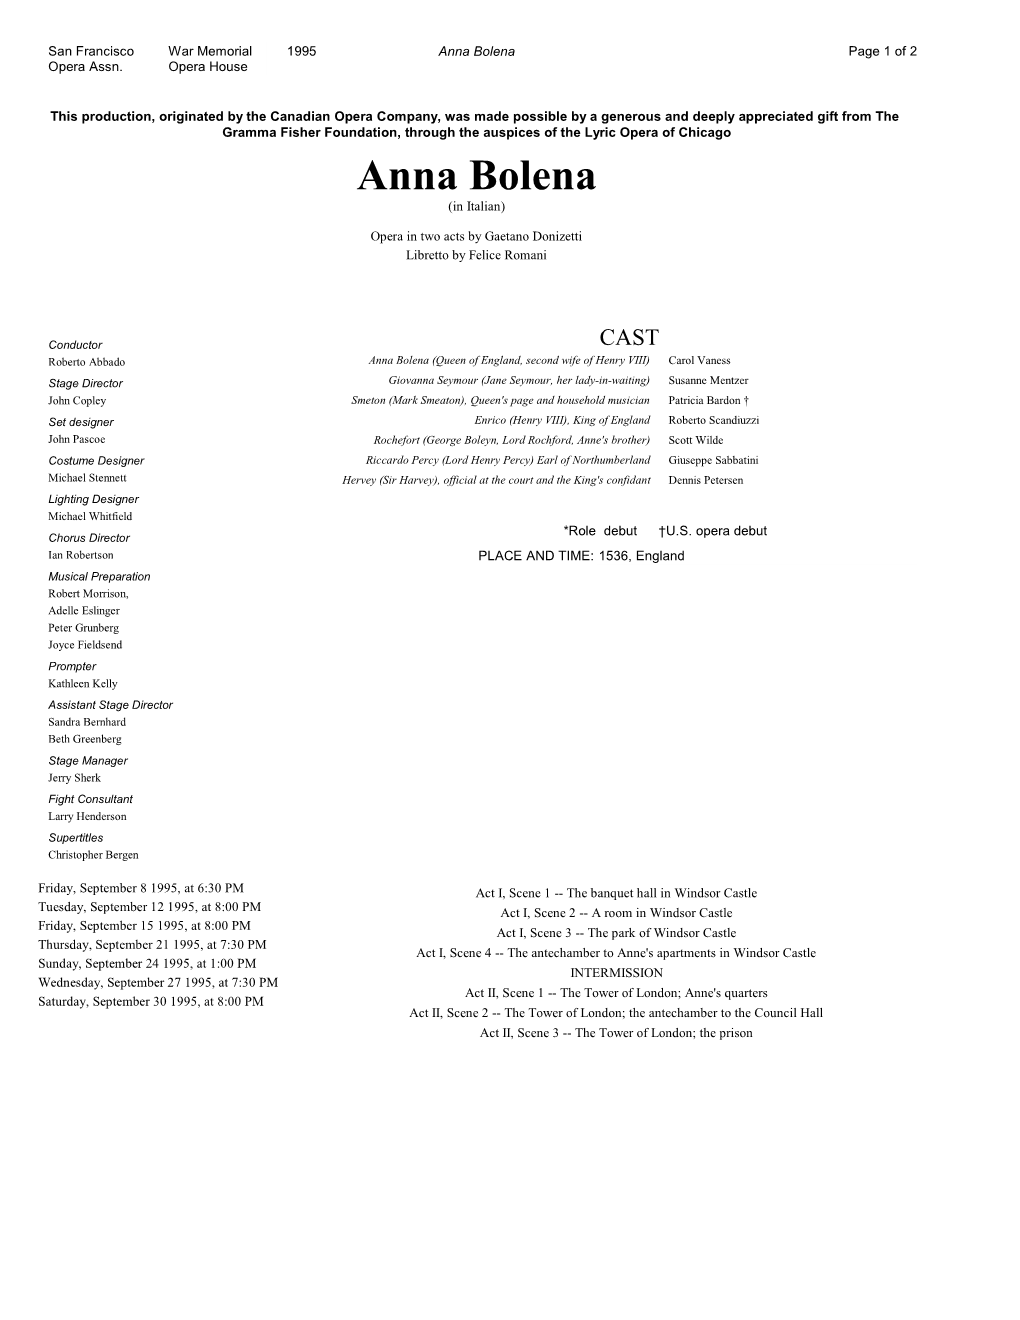 Anna Bolena Page 1 of 2 Opera Assn